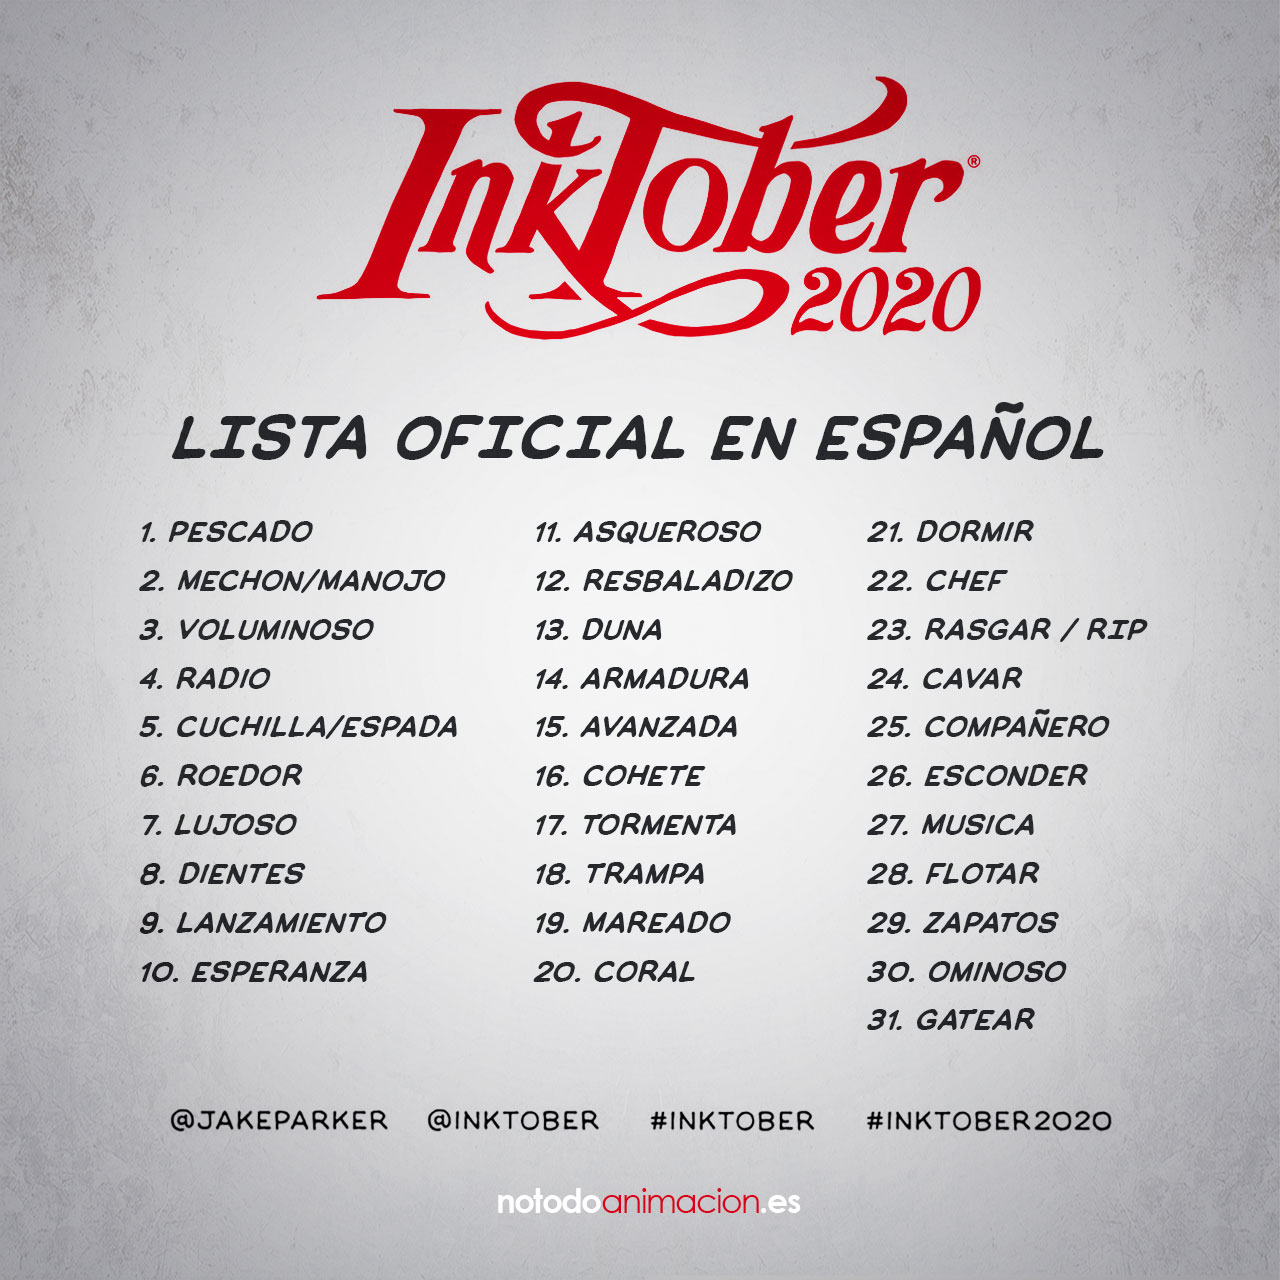 inktober lista 2020 en español